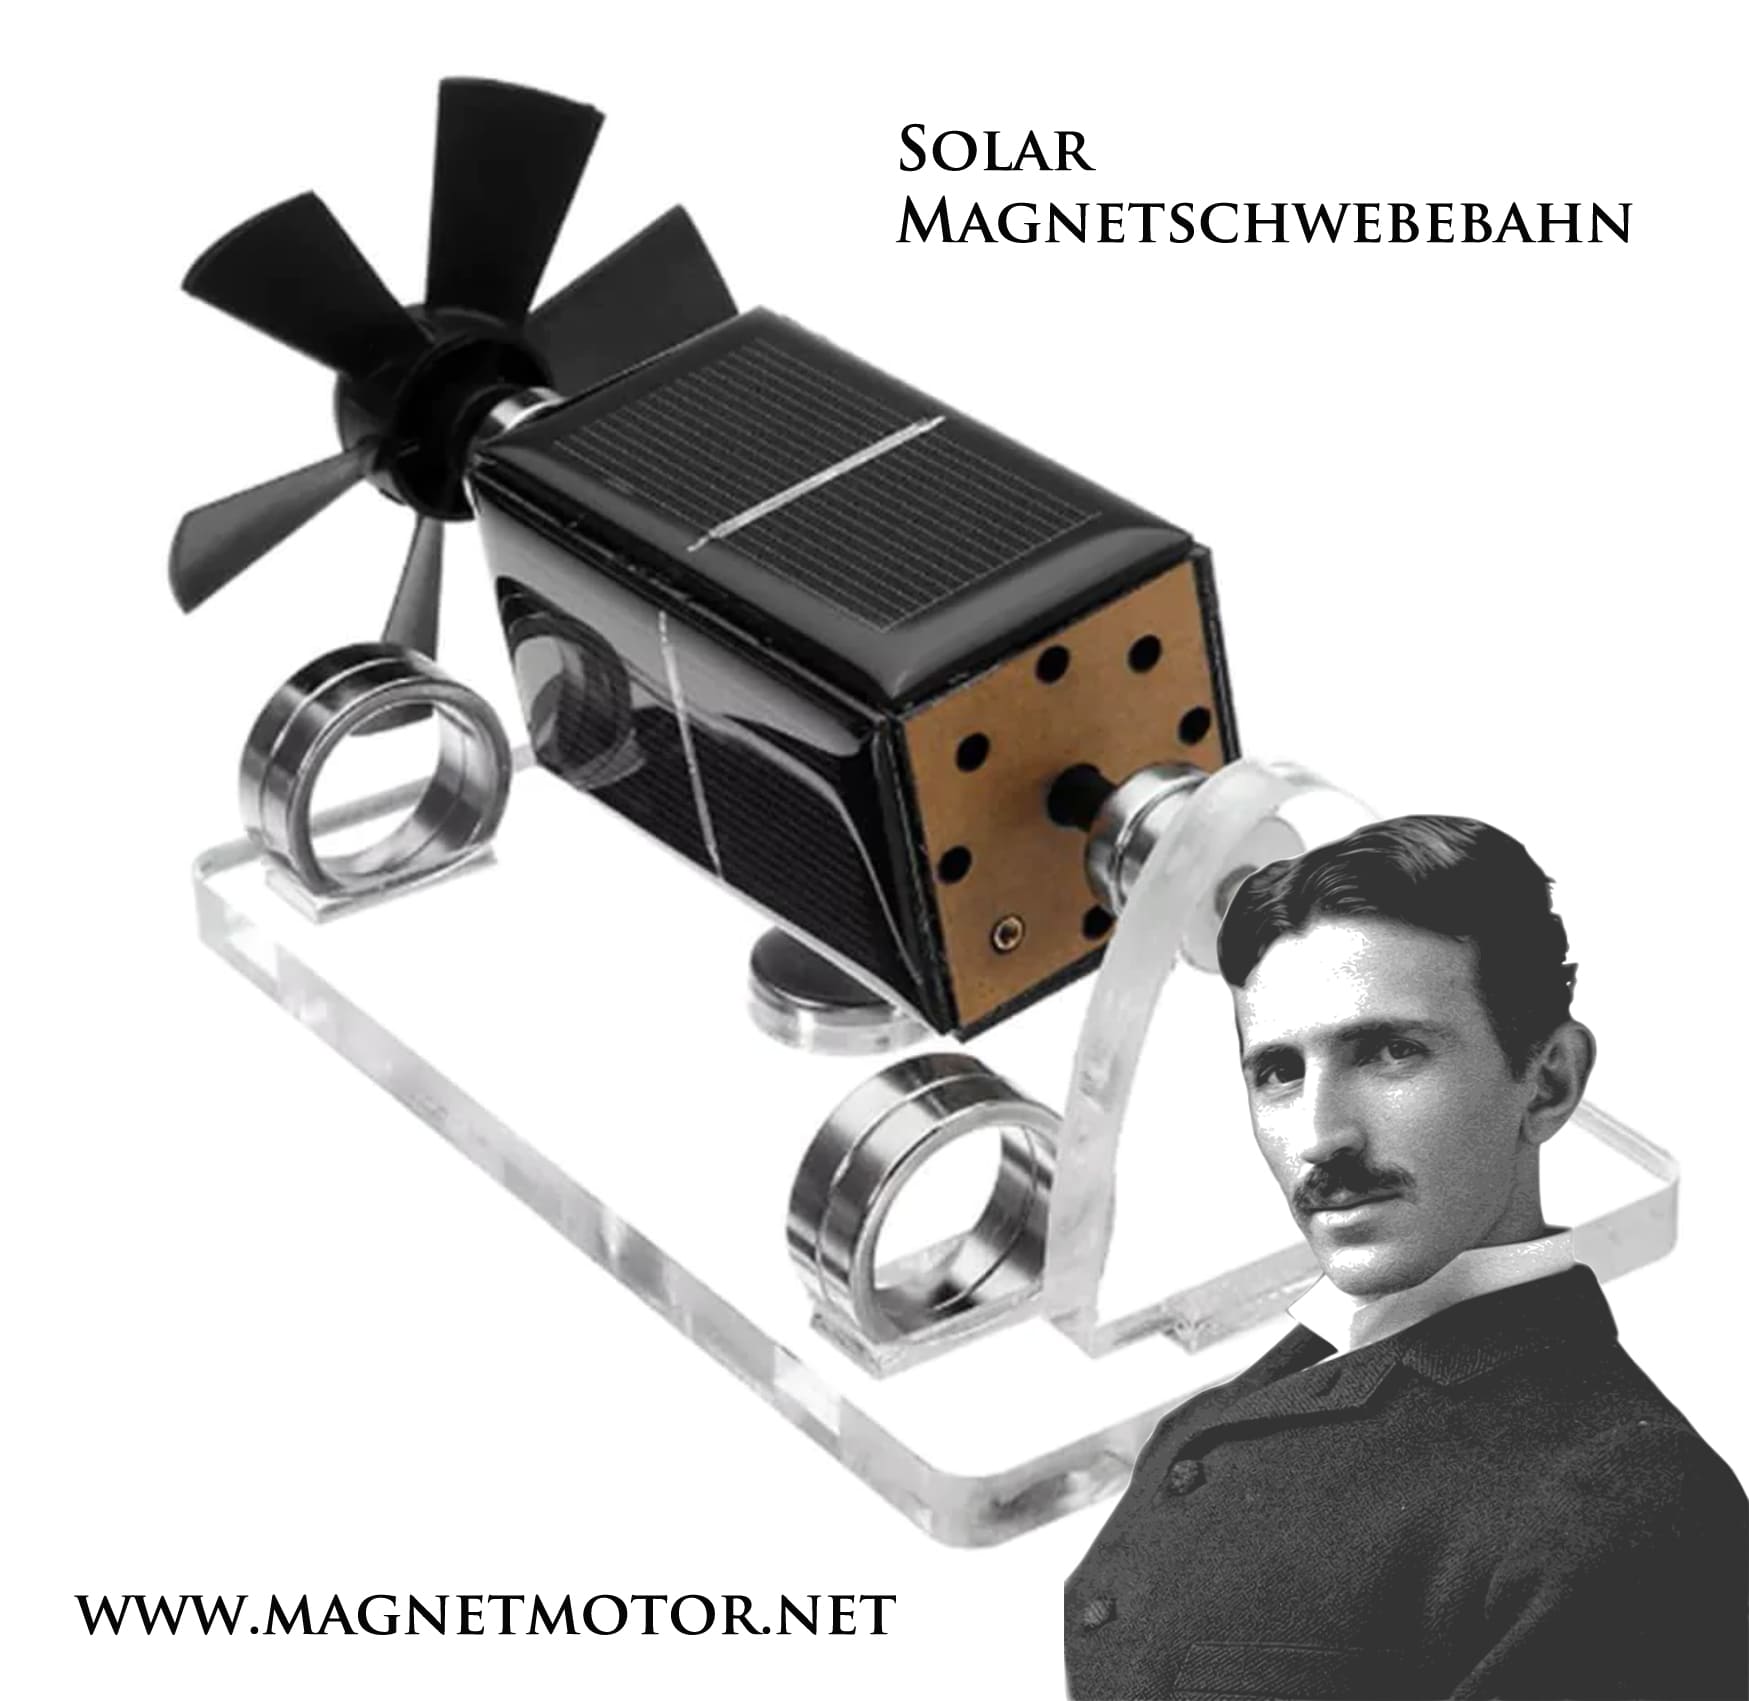 Magnetmotor mit Solar Betrieb